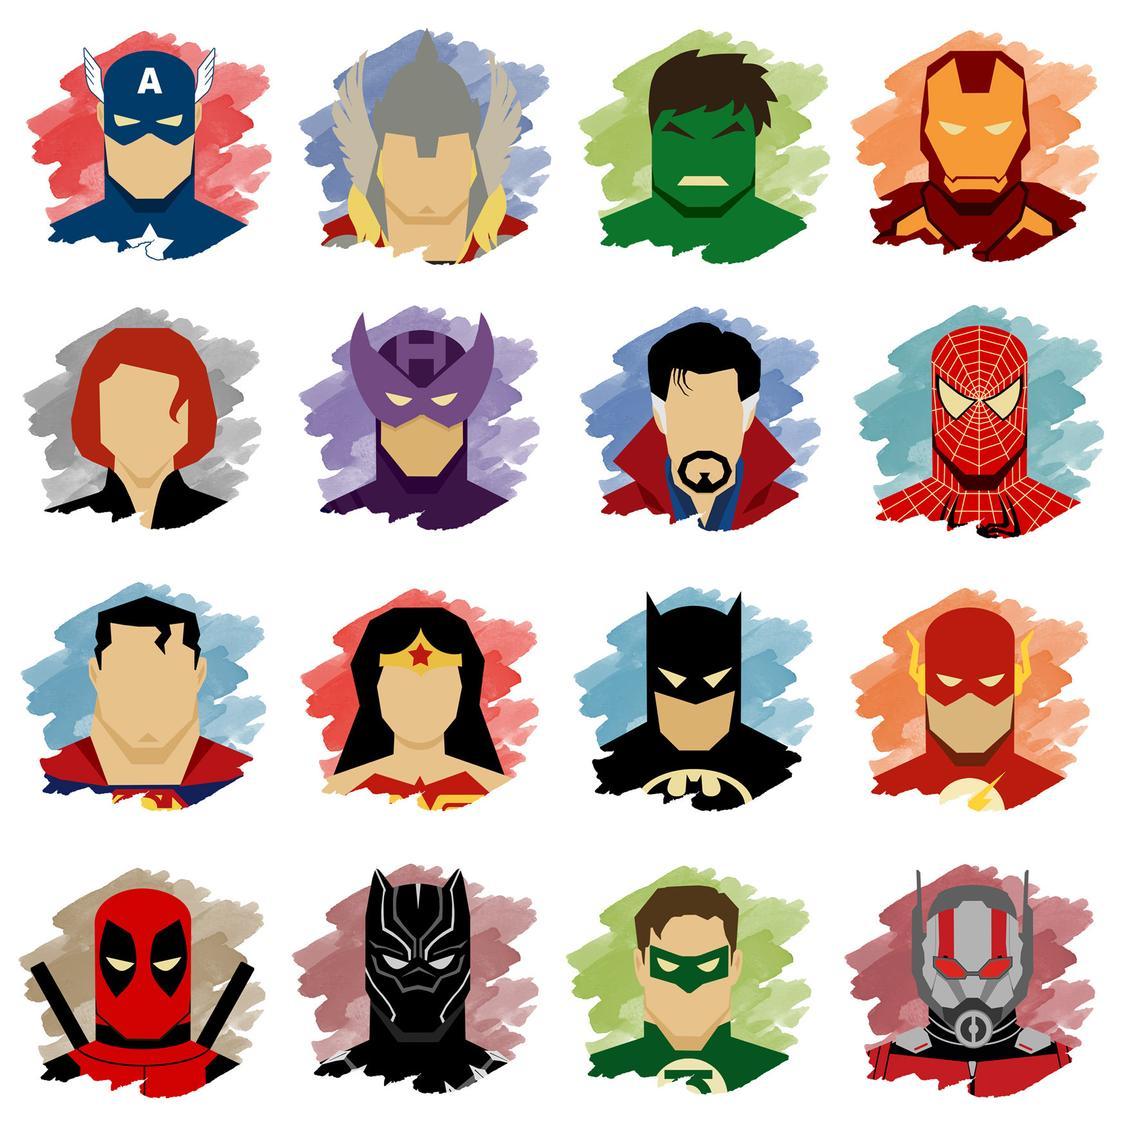 Personalized Superhero Enamel Mug-cutegifts.eu